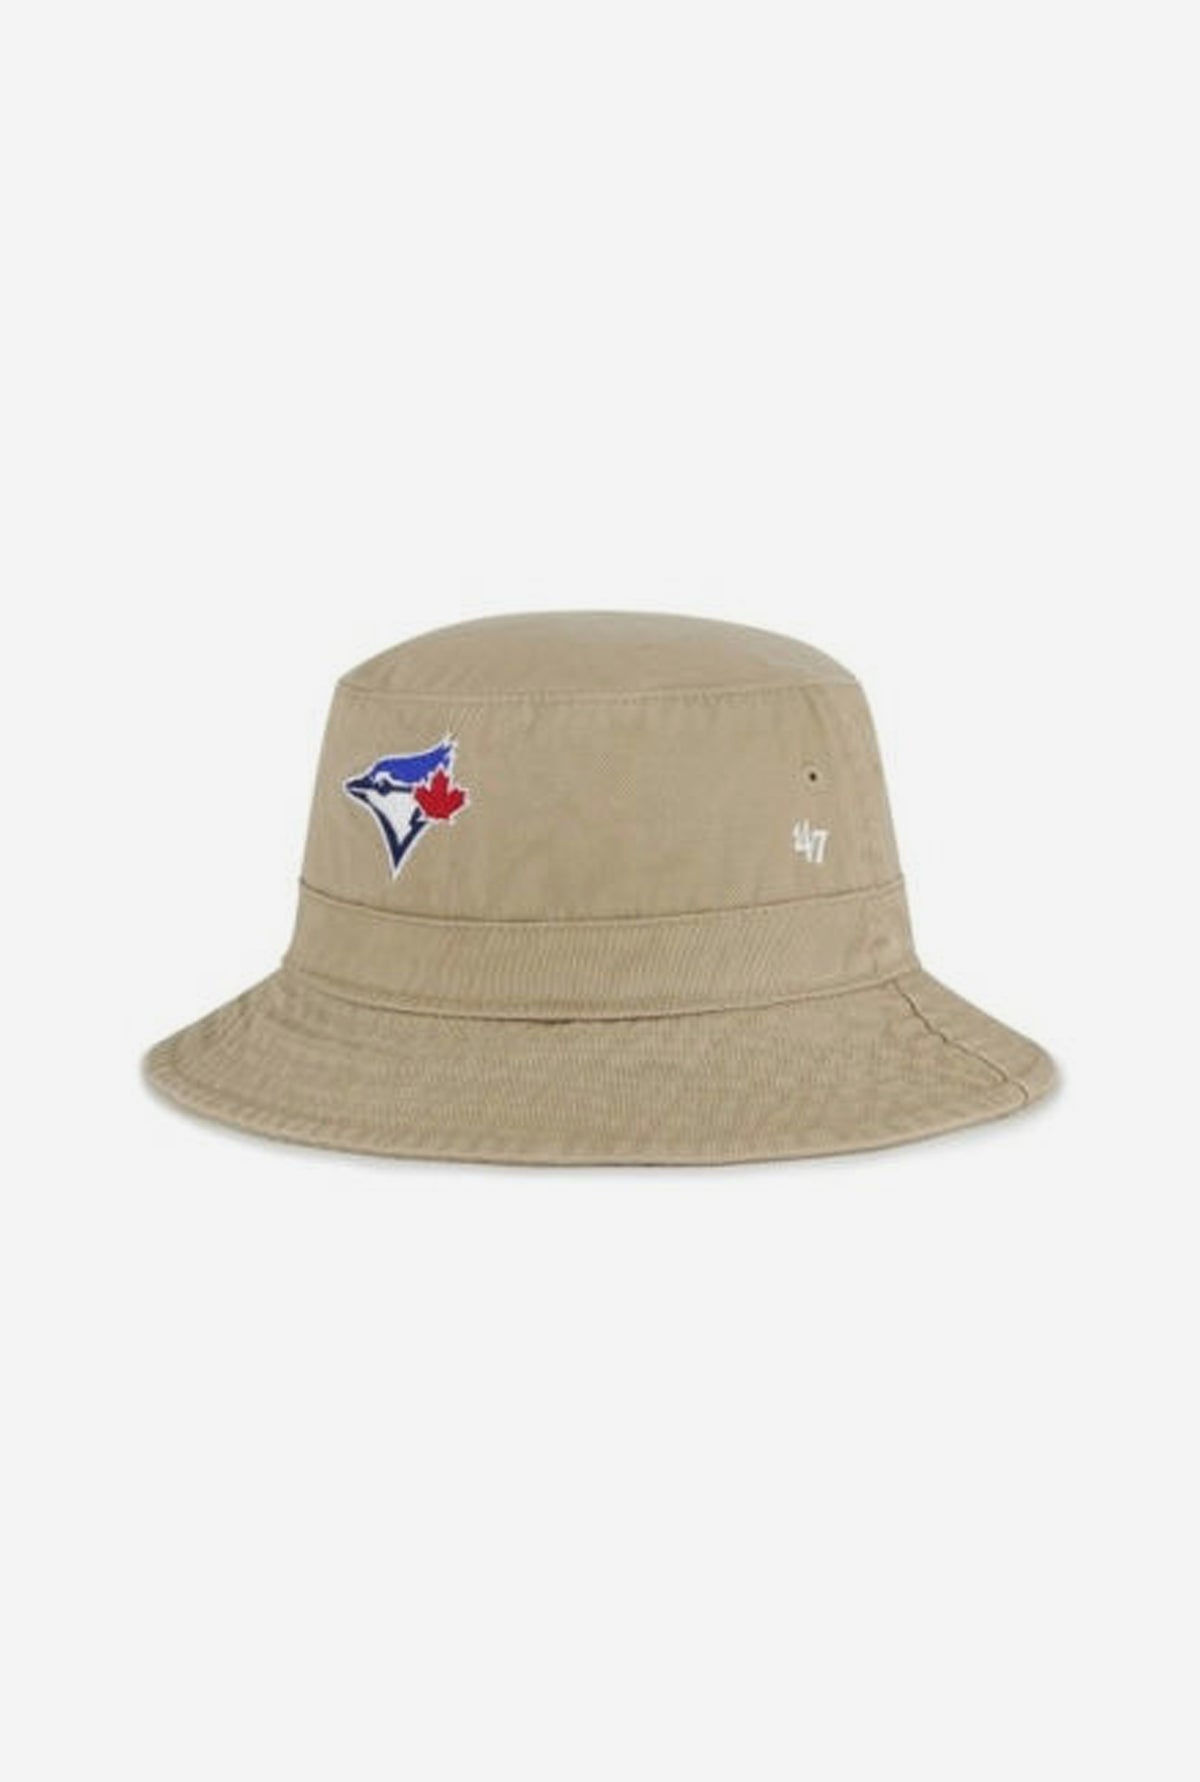 Toronto Blue Jays Primary Bucket Hat